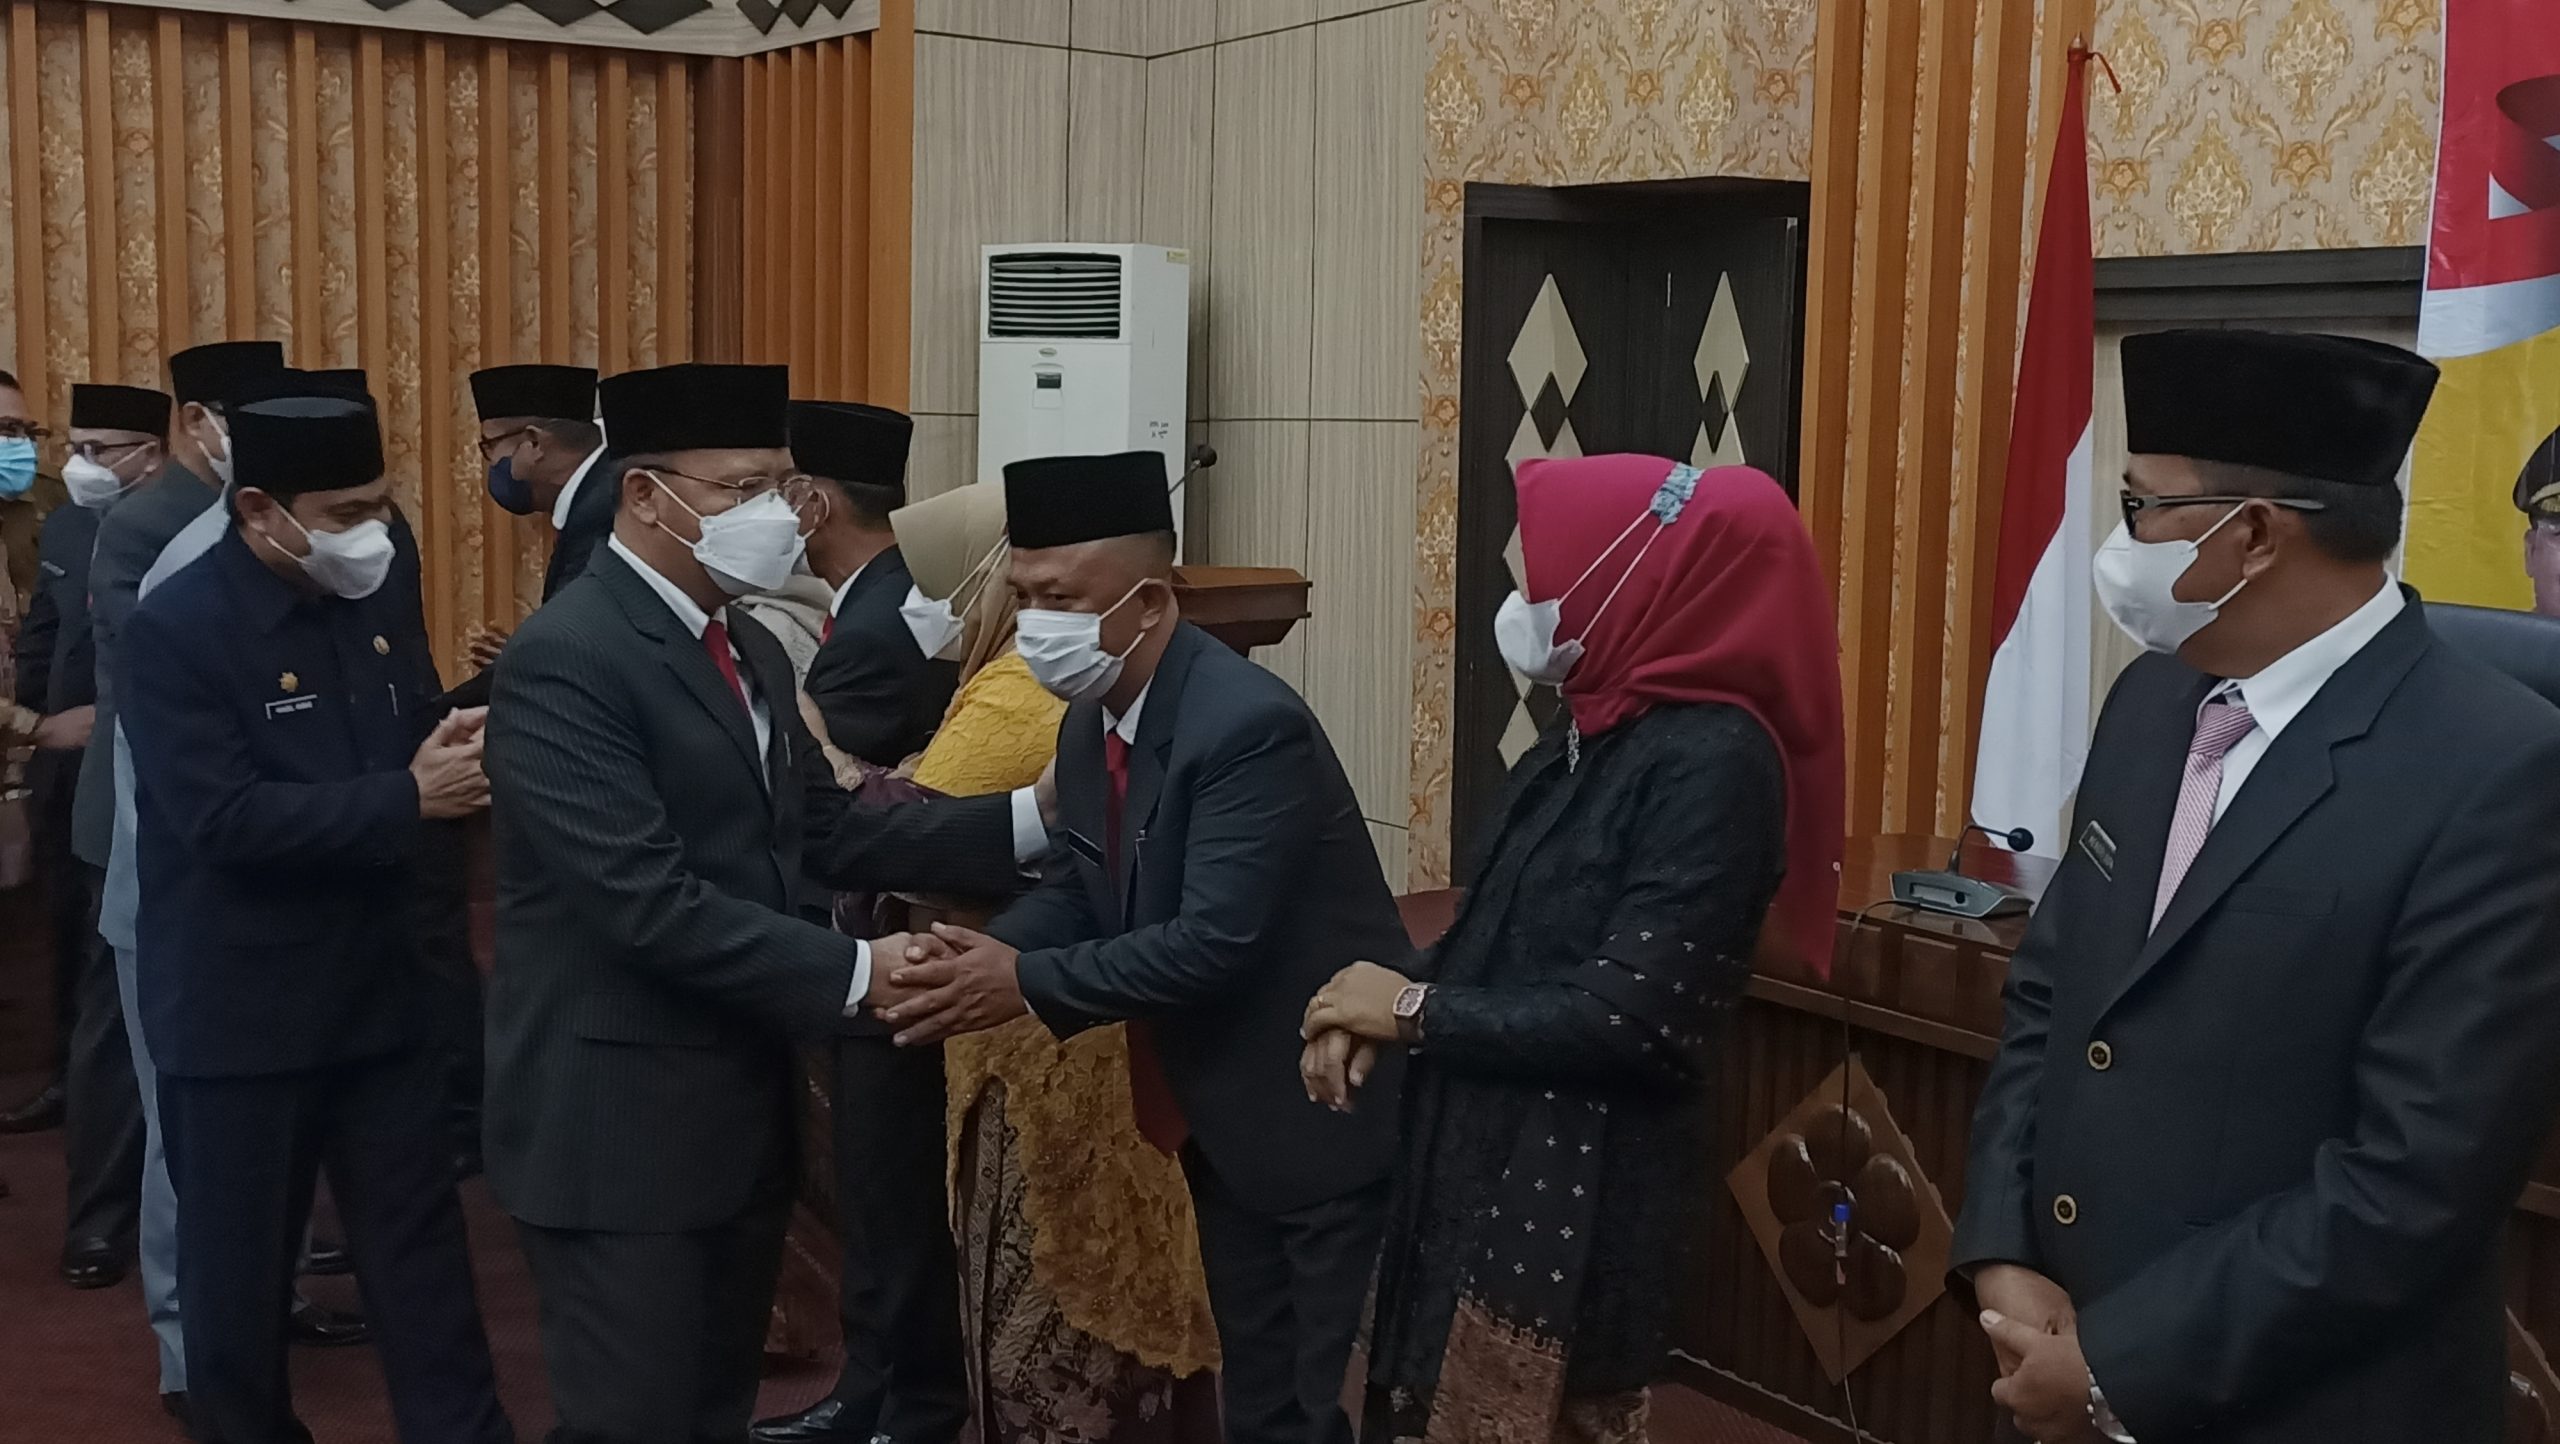  Gubernur Bengkulu Lantik Pejabat  Jelang Lebaran